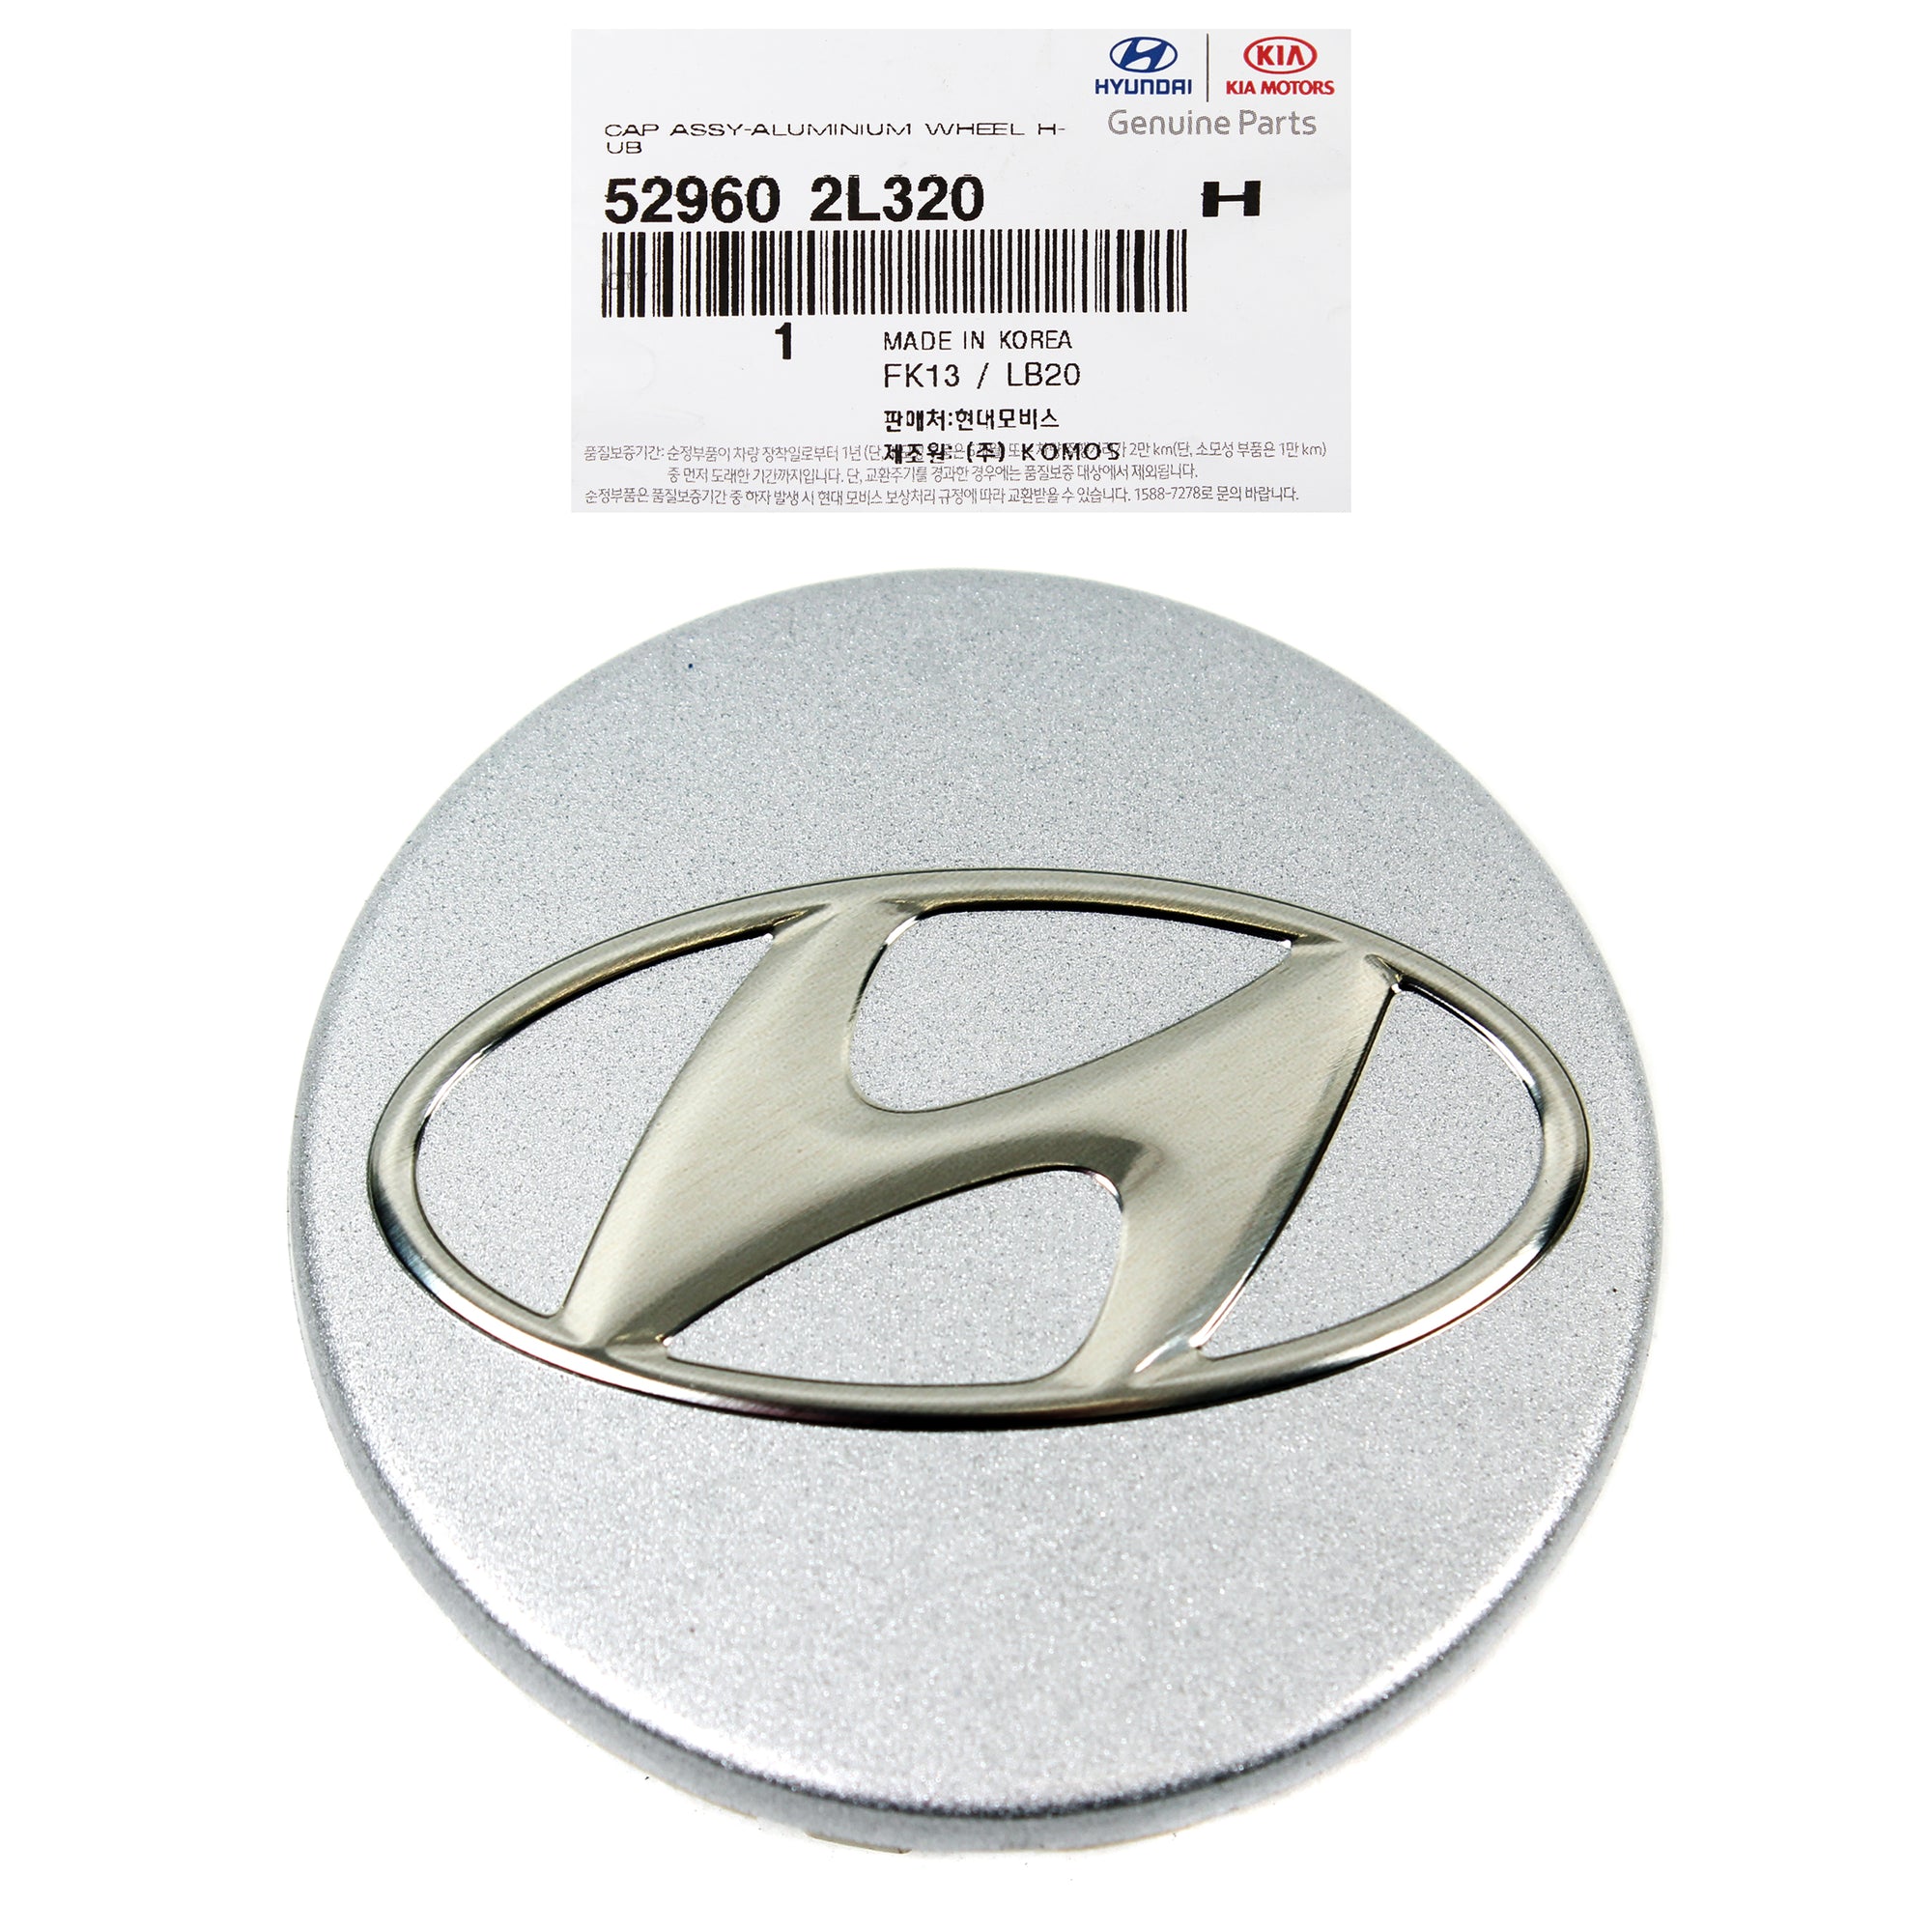 GENUINE Wheel Center Hub Cap for 2009-2014 Hyundai Genesis 3.8L 529602L320